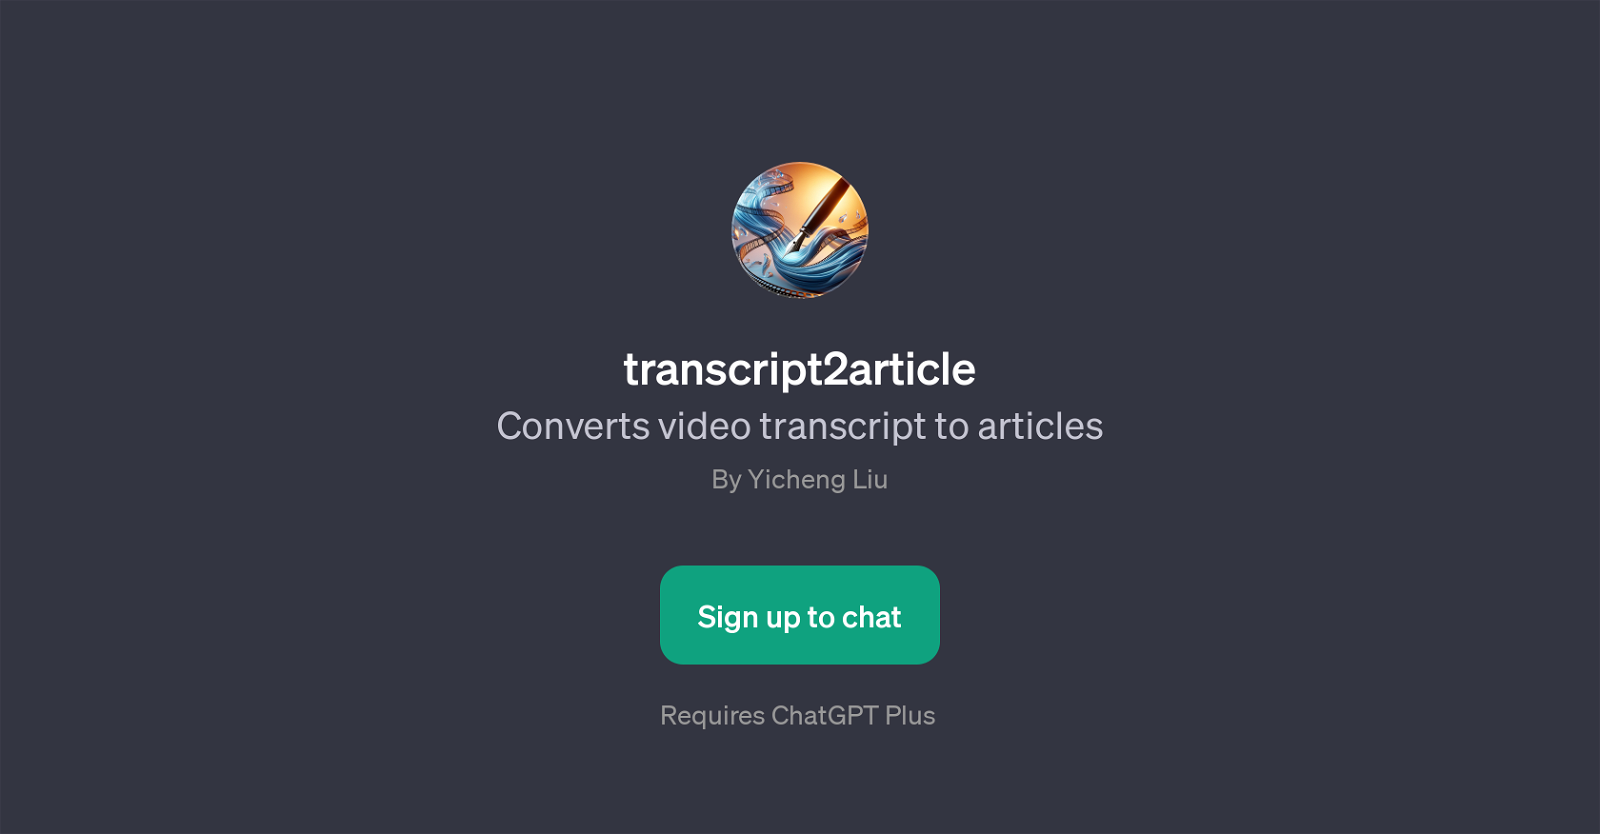 transcript2article website